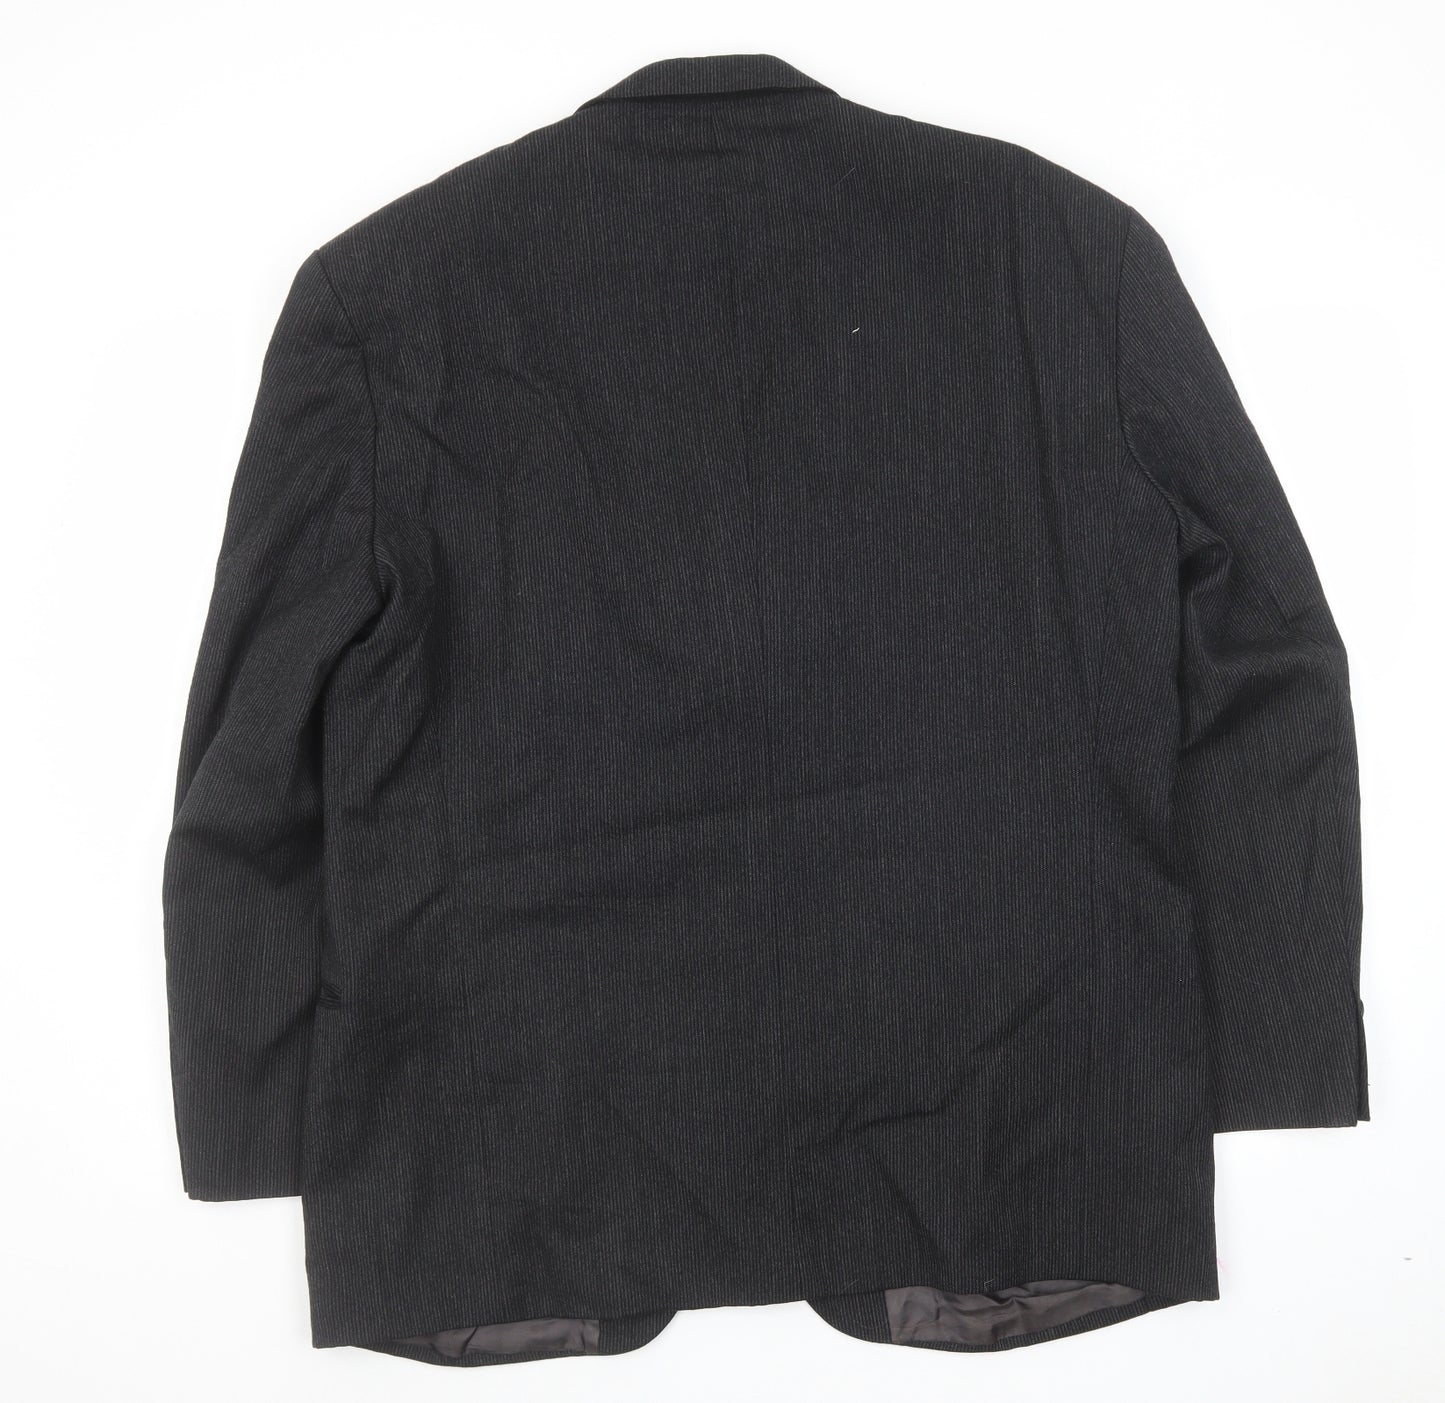 Candidate Mens Grey Striped Wool Jacket Suit Jacket Size 42 Regular